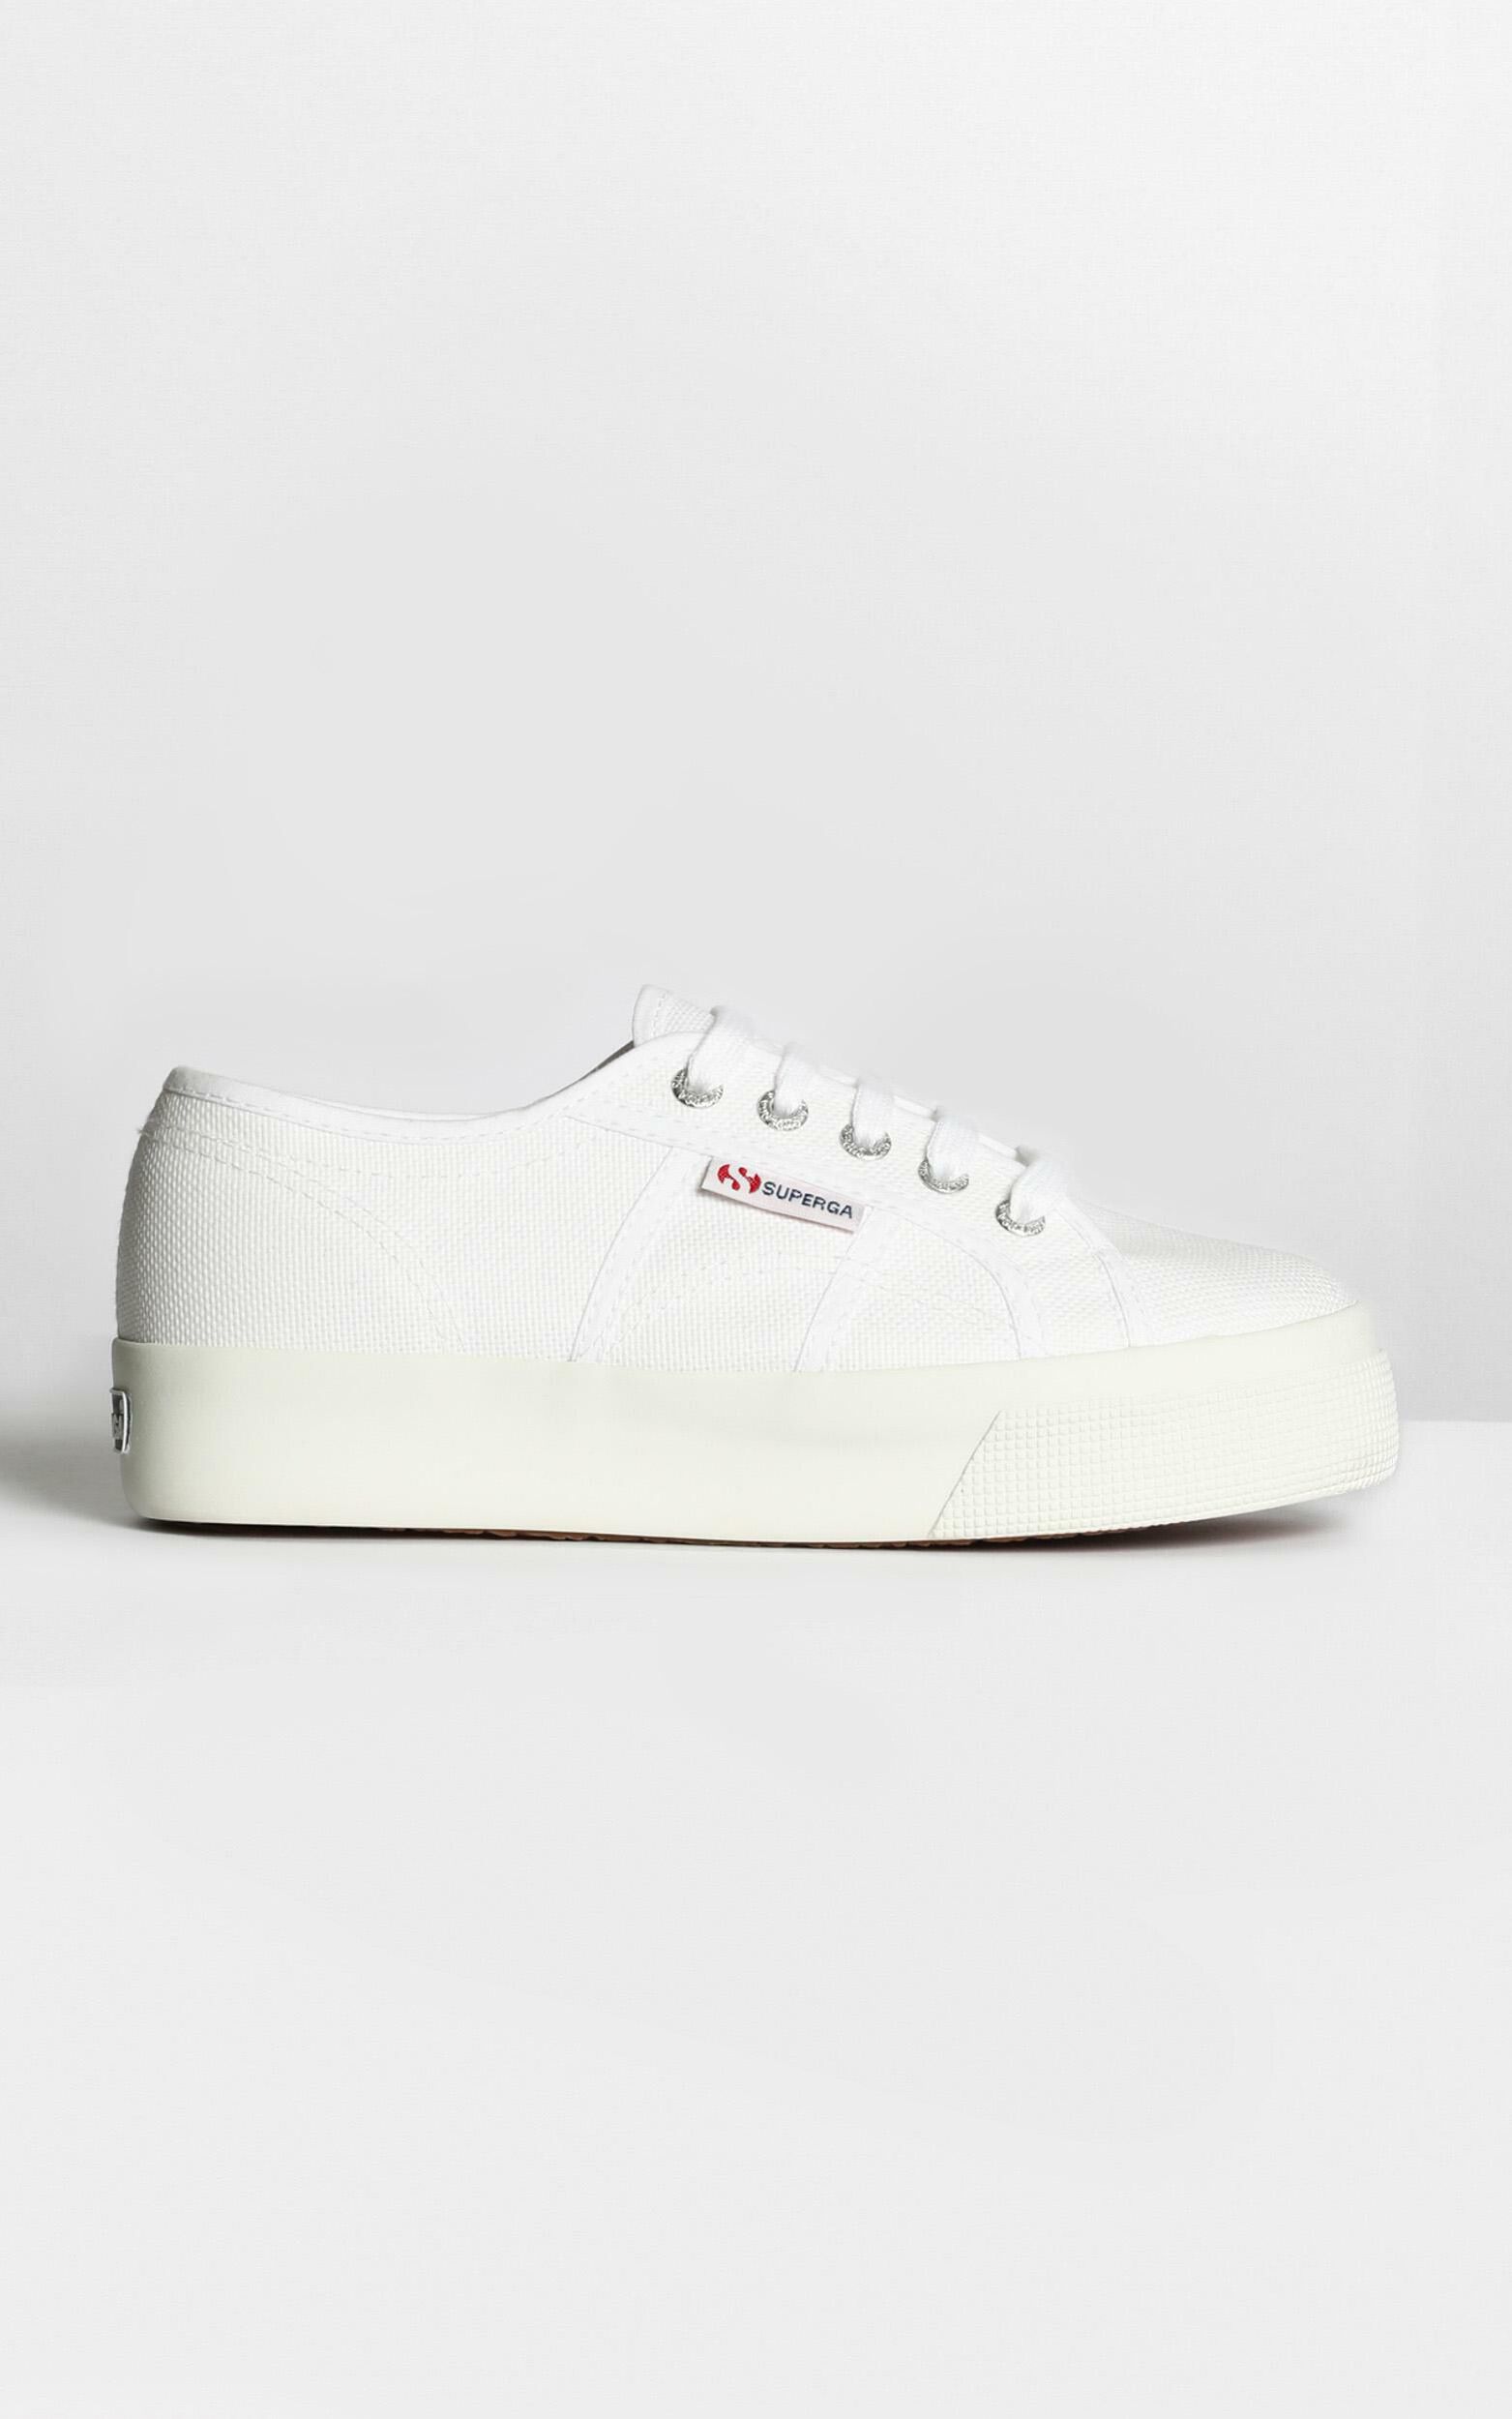 Superga- 2730 Cotu Sneakers in White Canvas - 06, WHT1